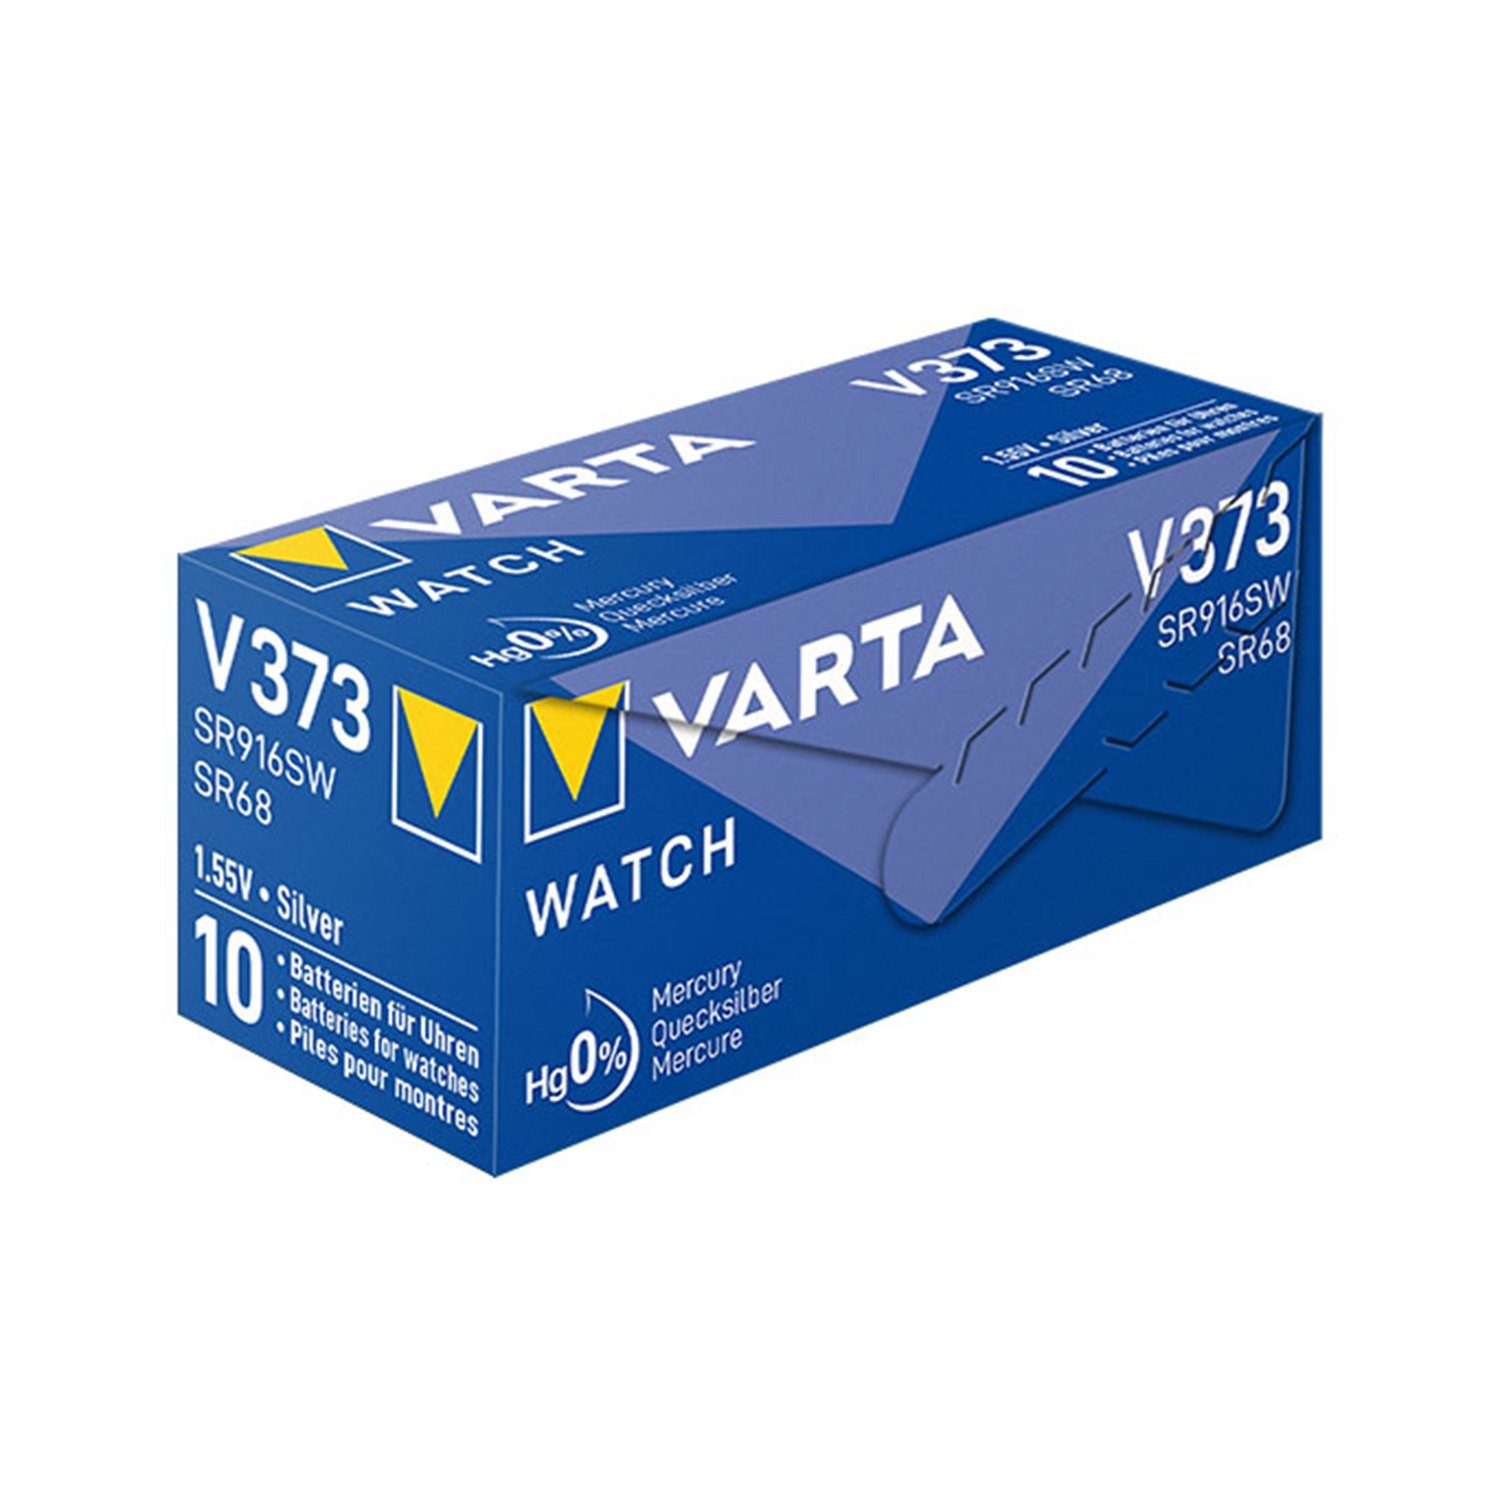 VARTA Varta 373 Batterie Knopfzelle